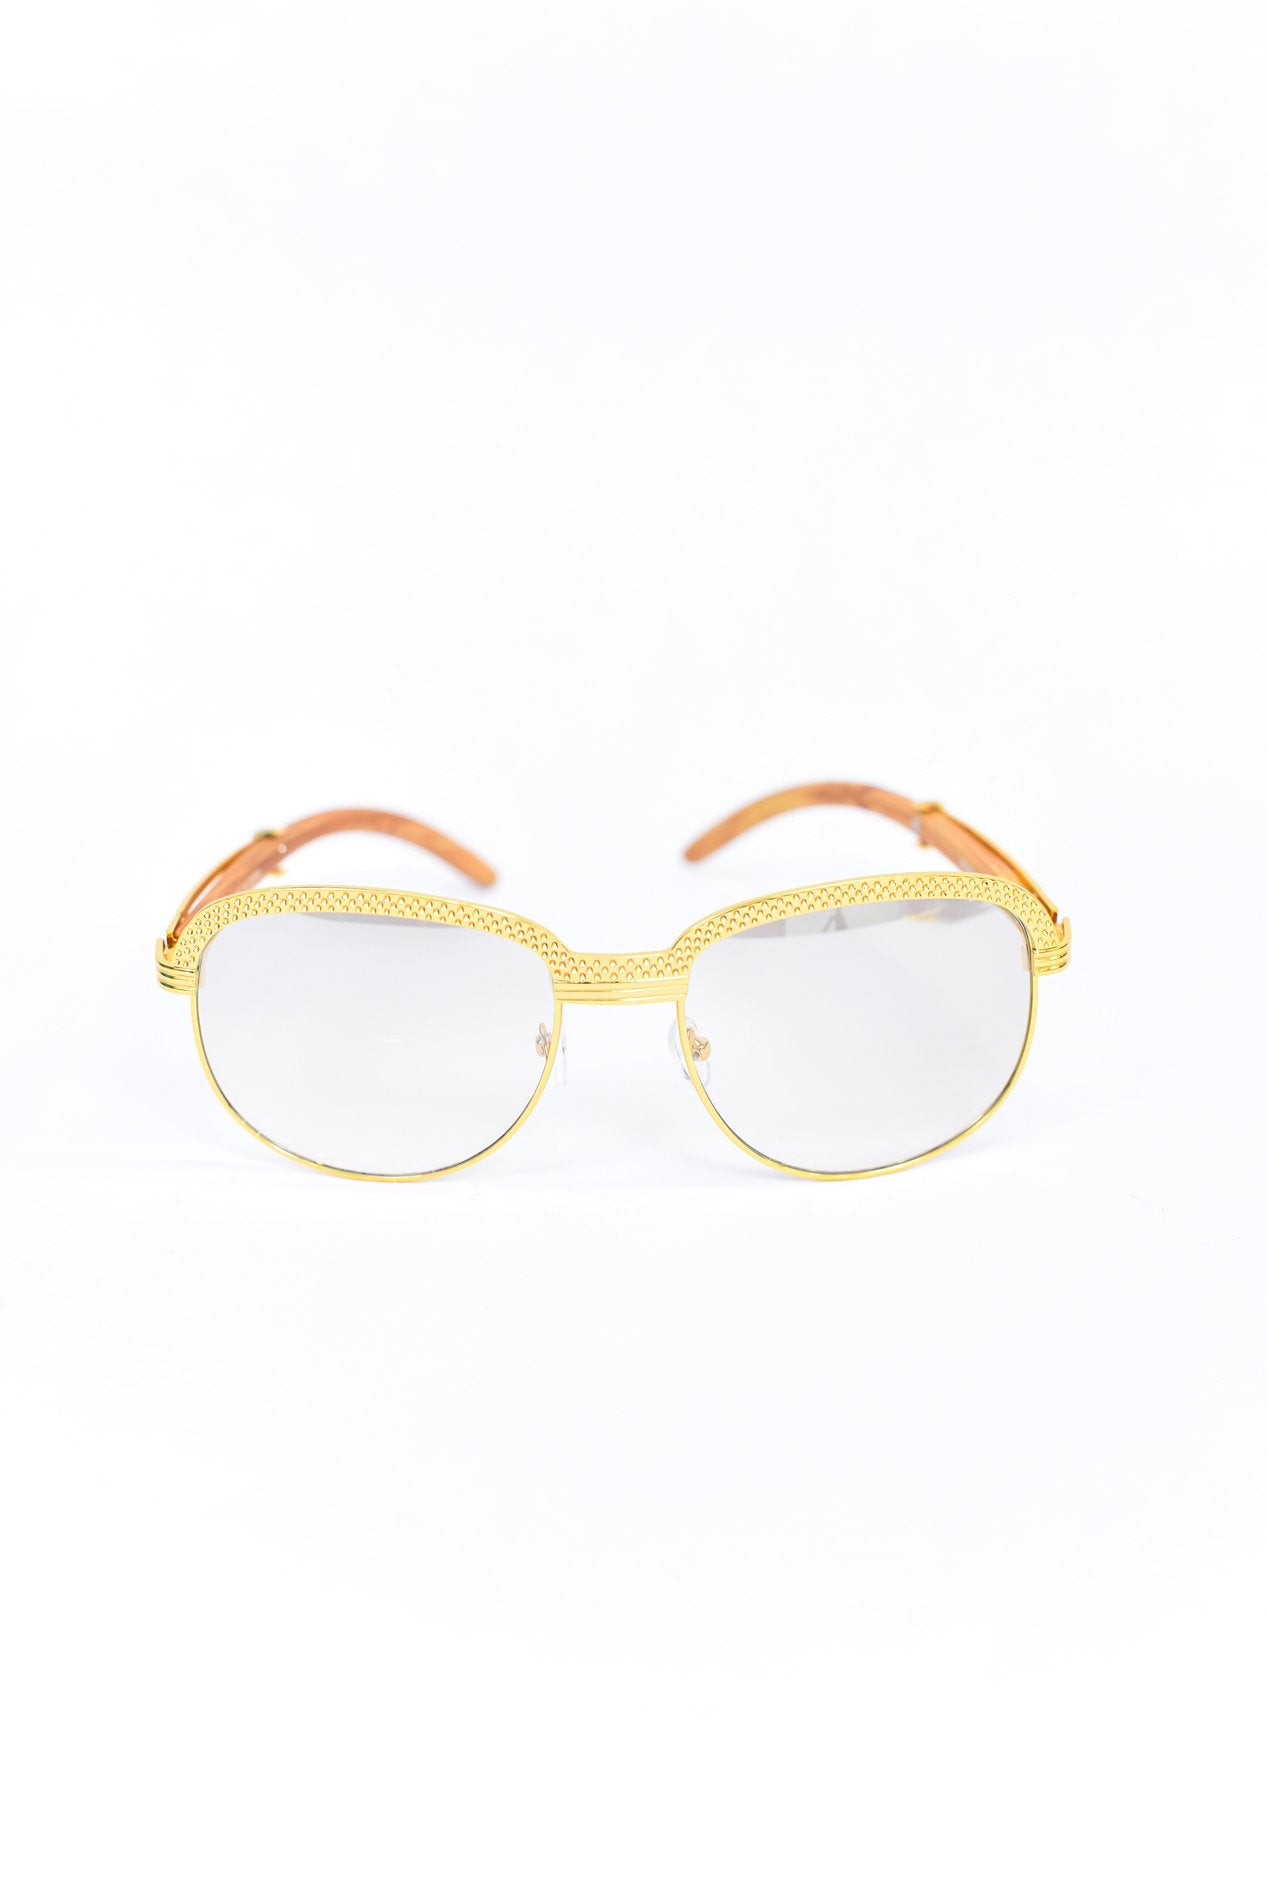 Gold Frame/Natural/Mirrored Lens Sunglasses - SGL296NA